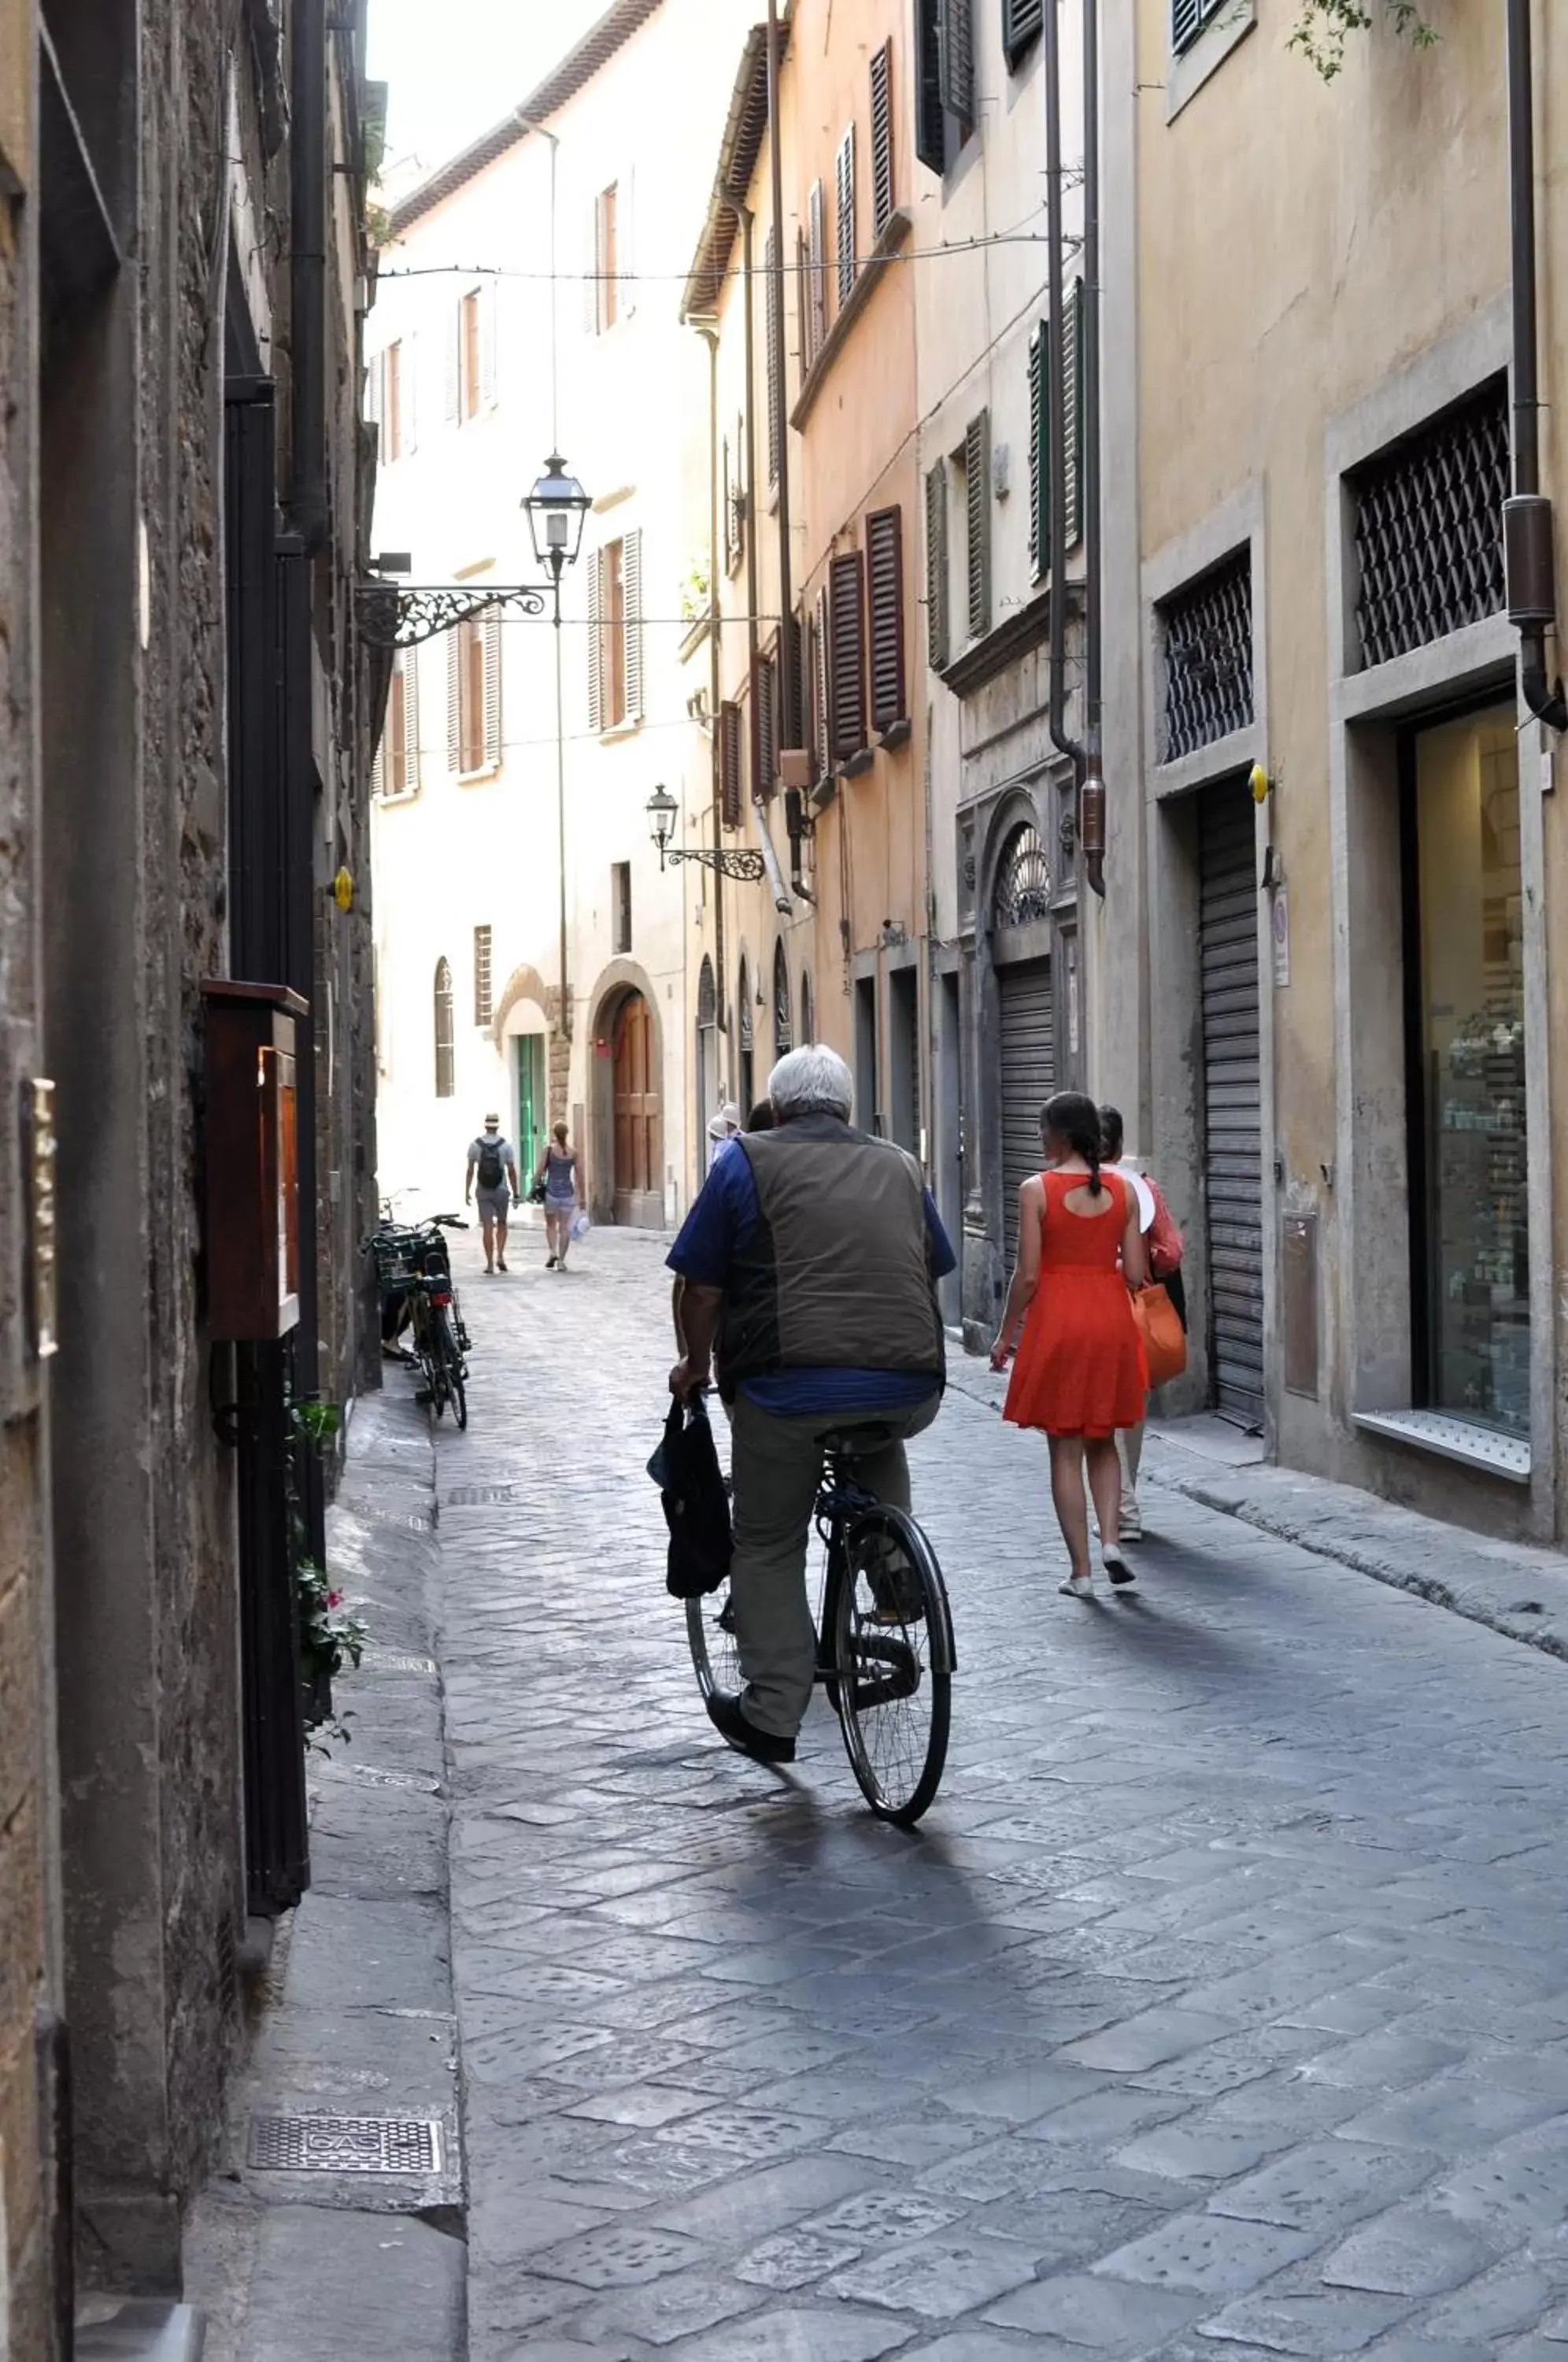 Street view, Biking in Canto degli Scali